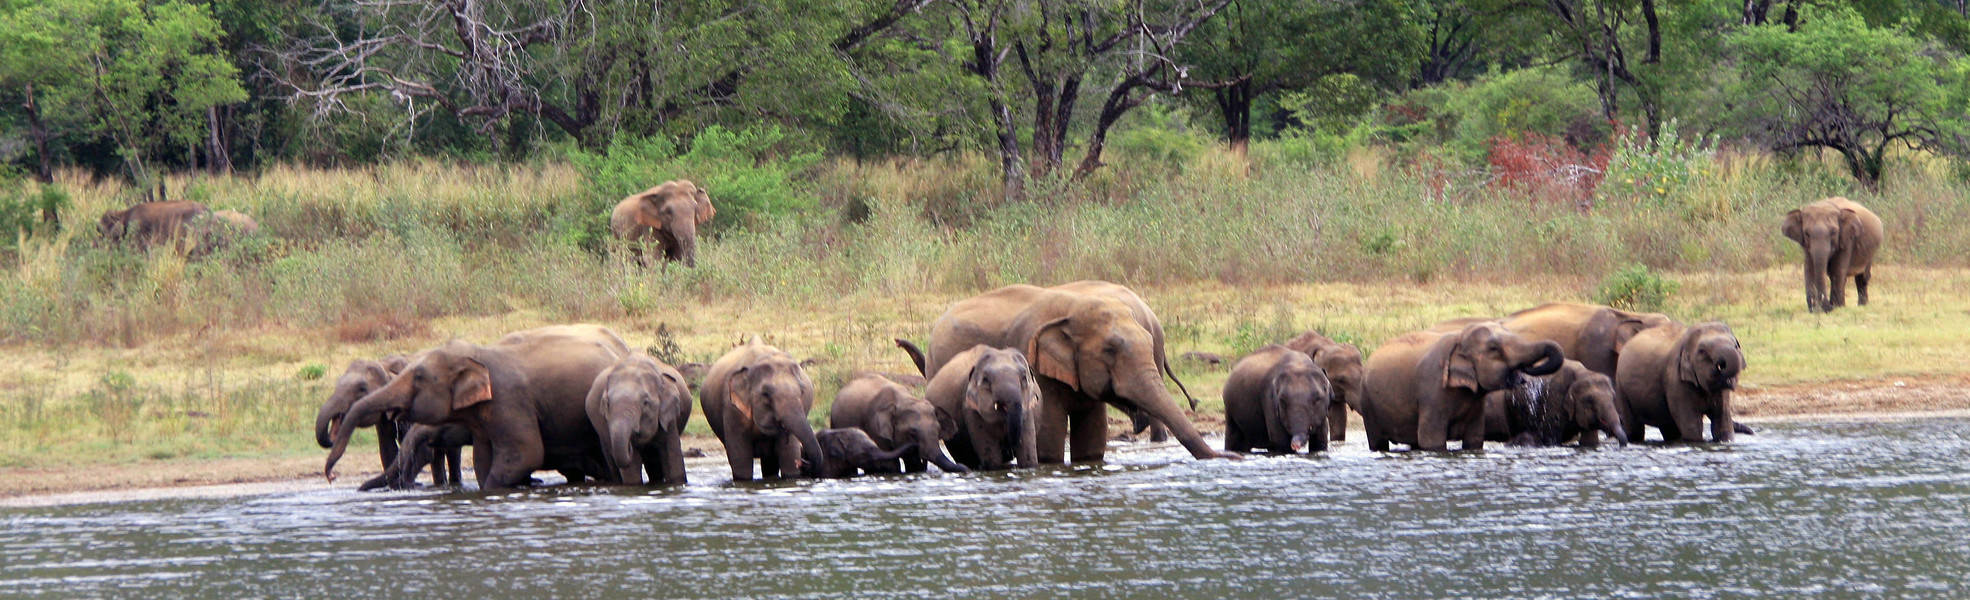 Elephants in the Wasgamuwa National Park in Sri Lanka